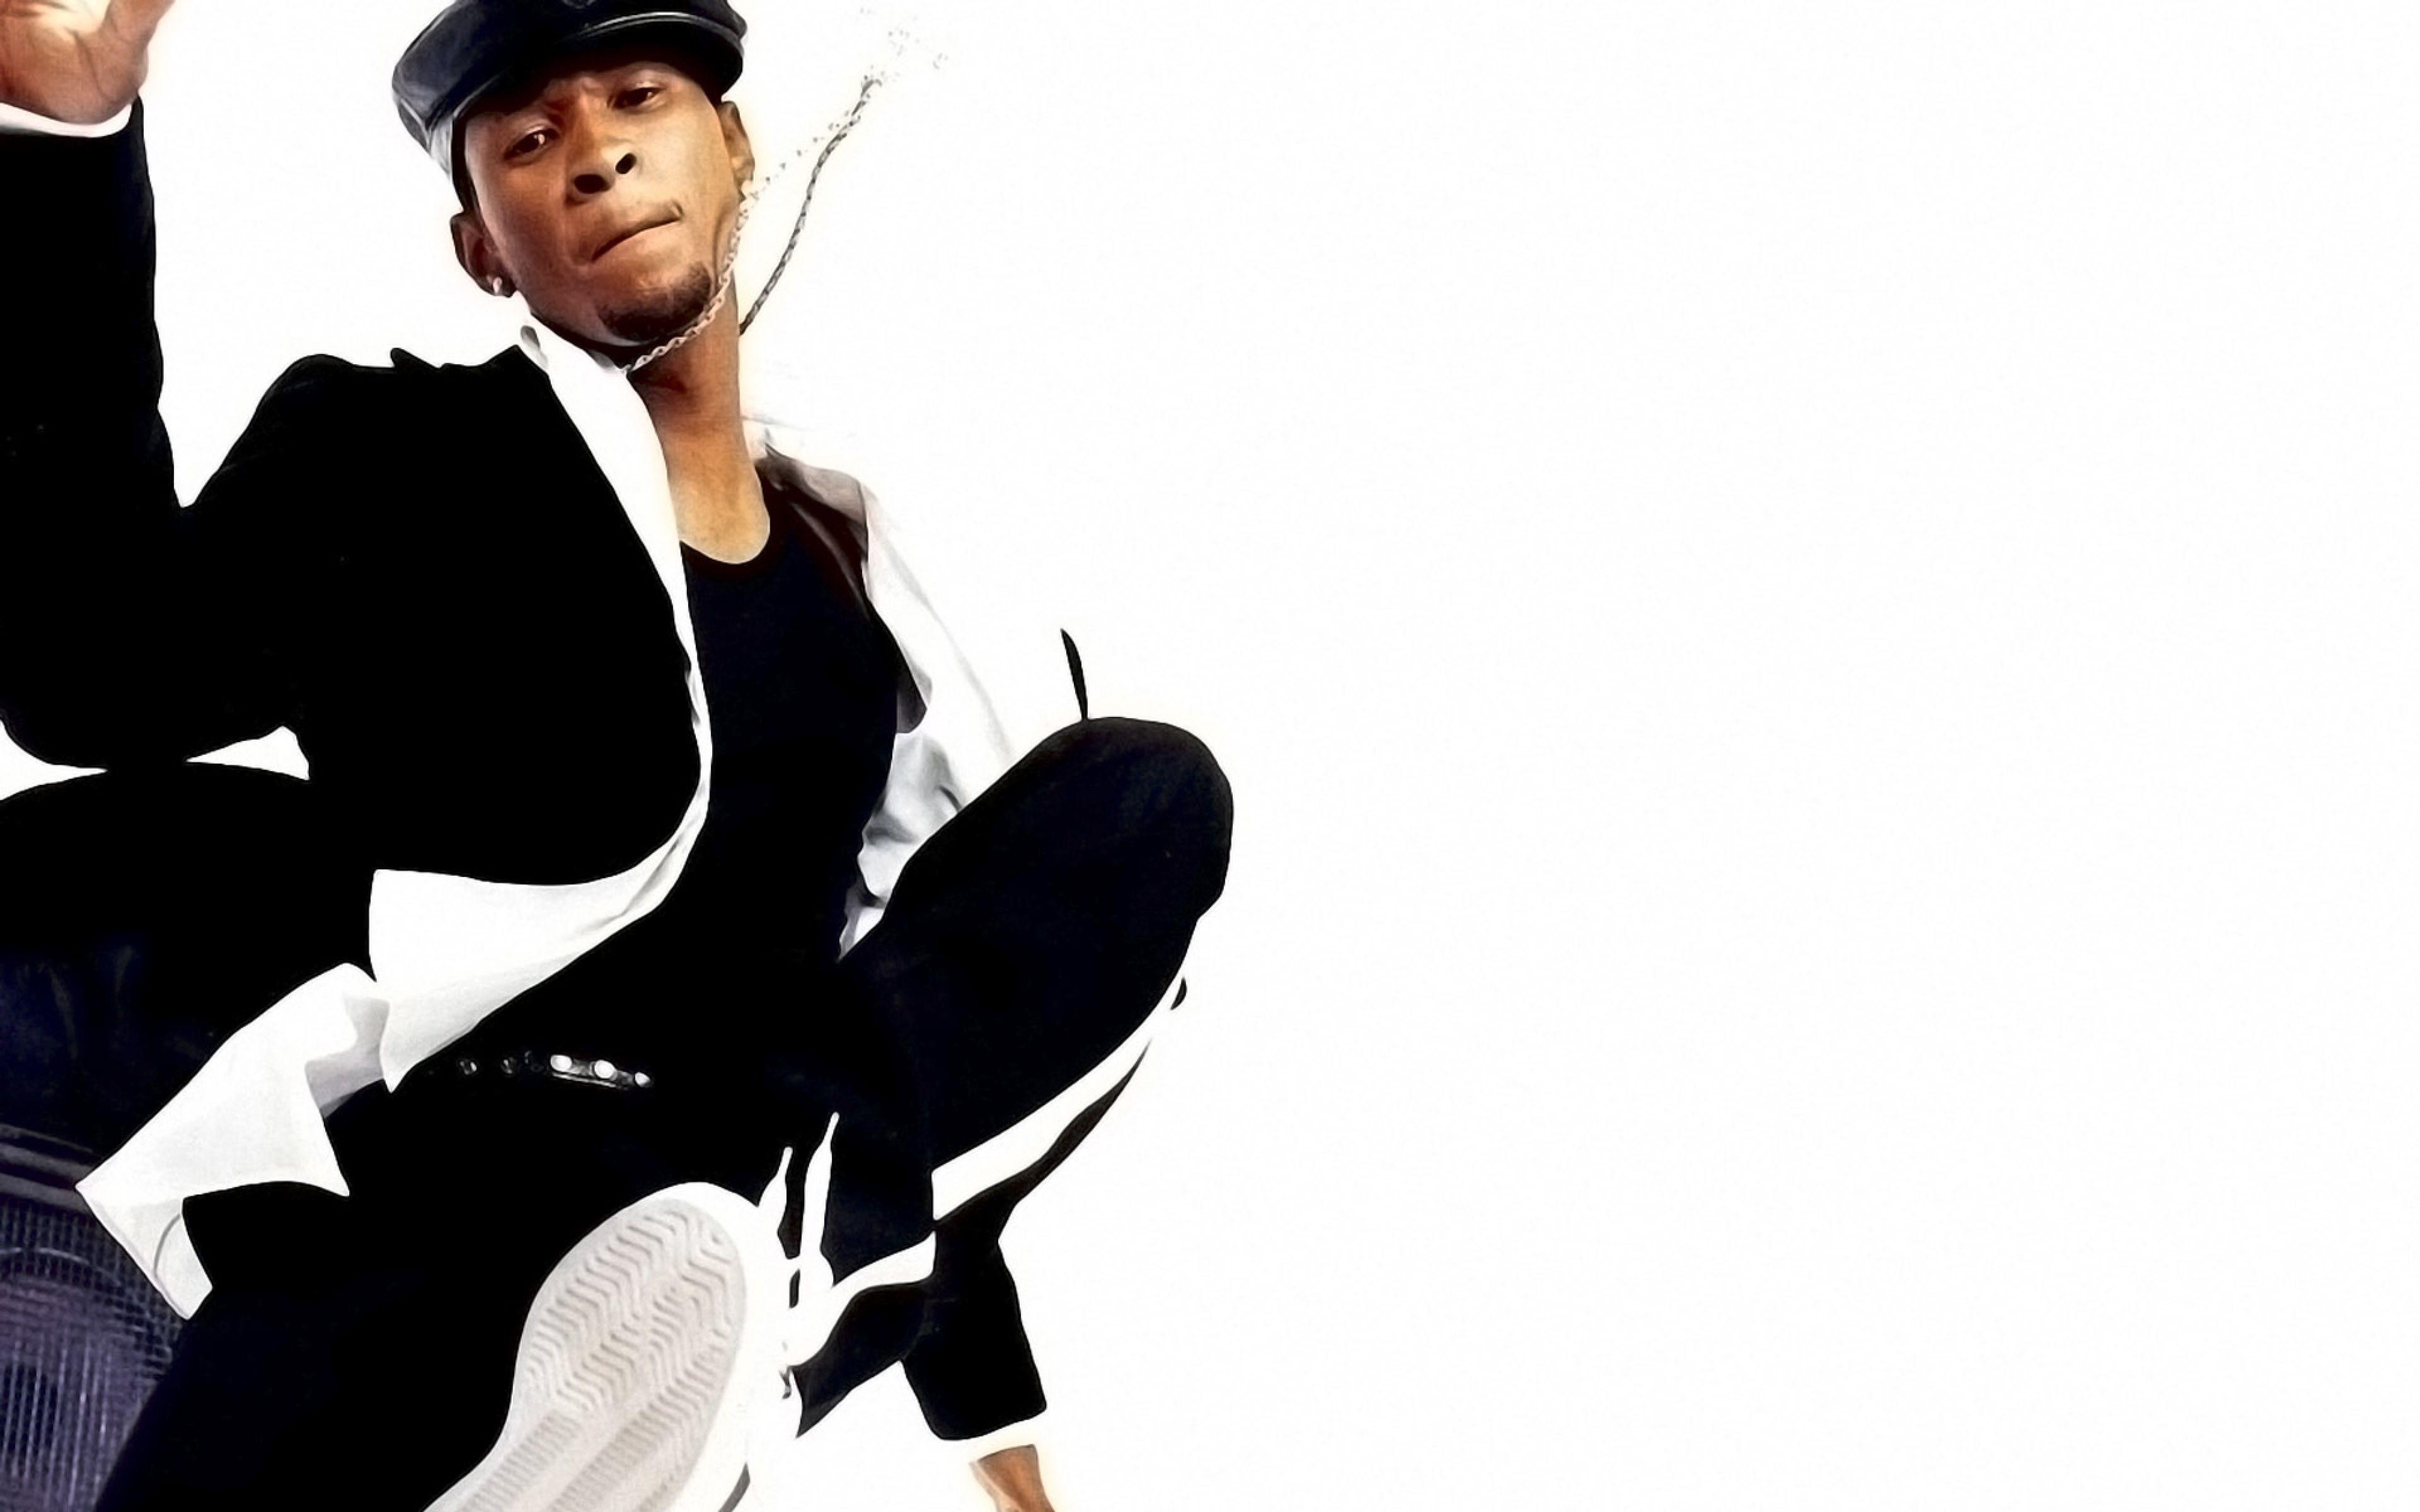 Download Wallpaper 3840x2400 Usher, Singer, Dance, Sports, Style